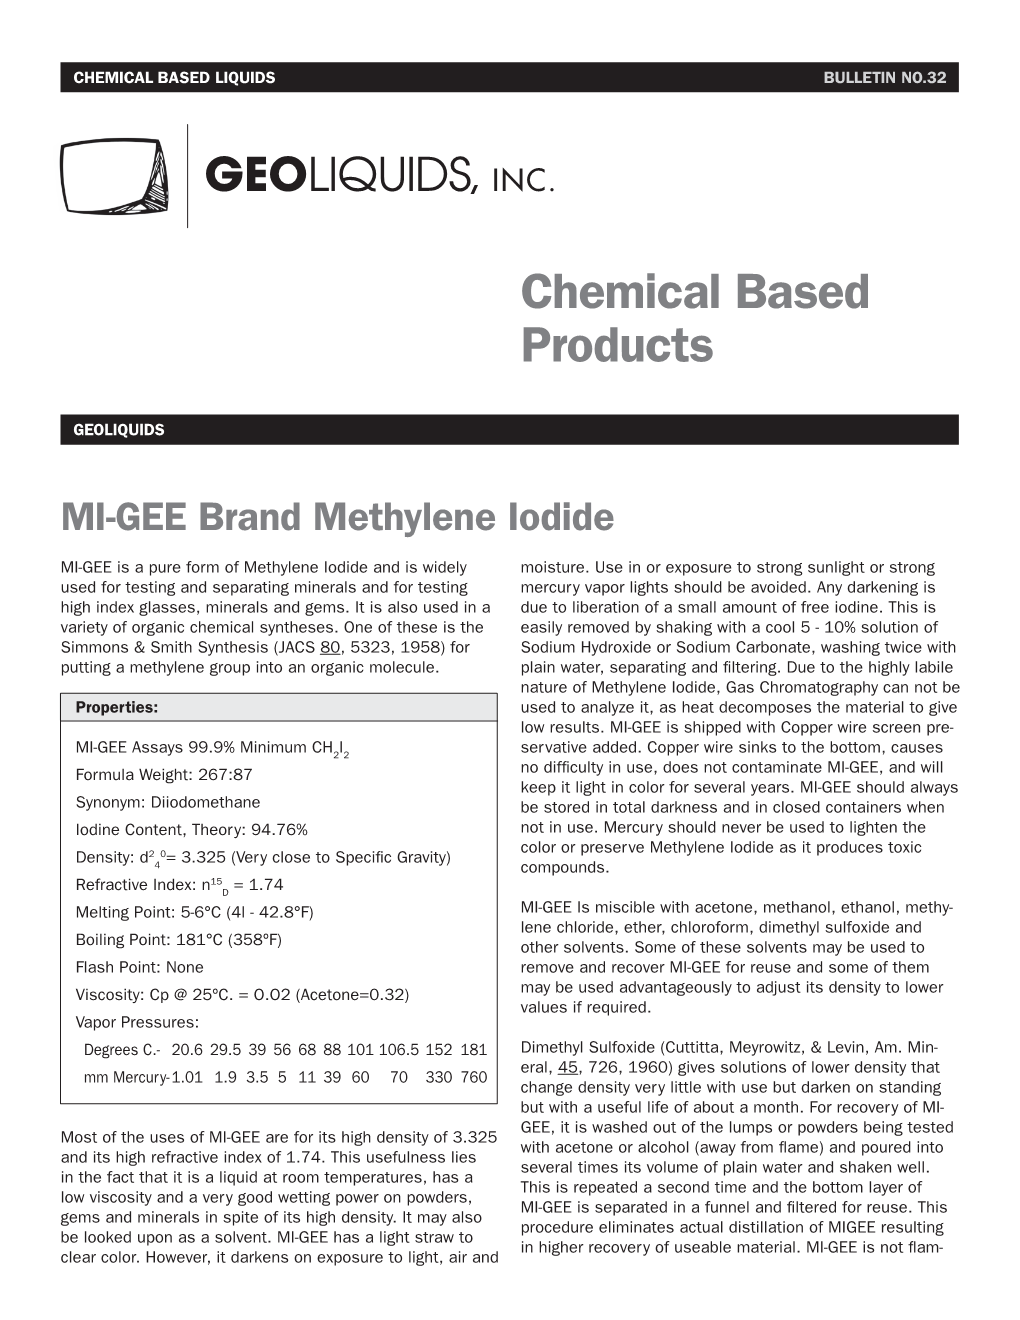 MI-GEE Brand Methylene Iodide